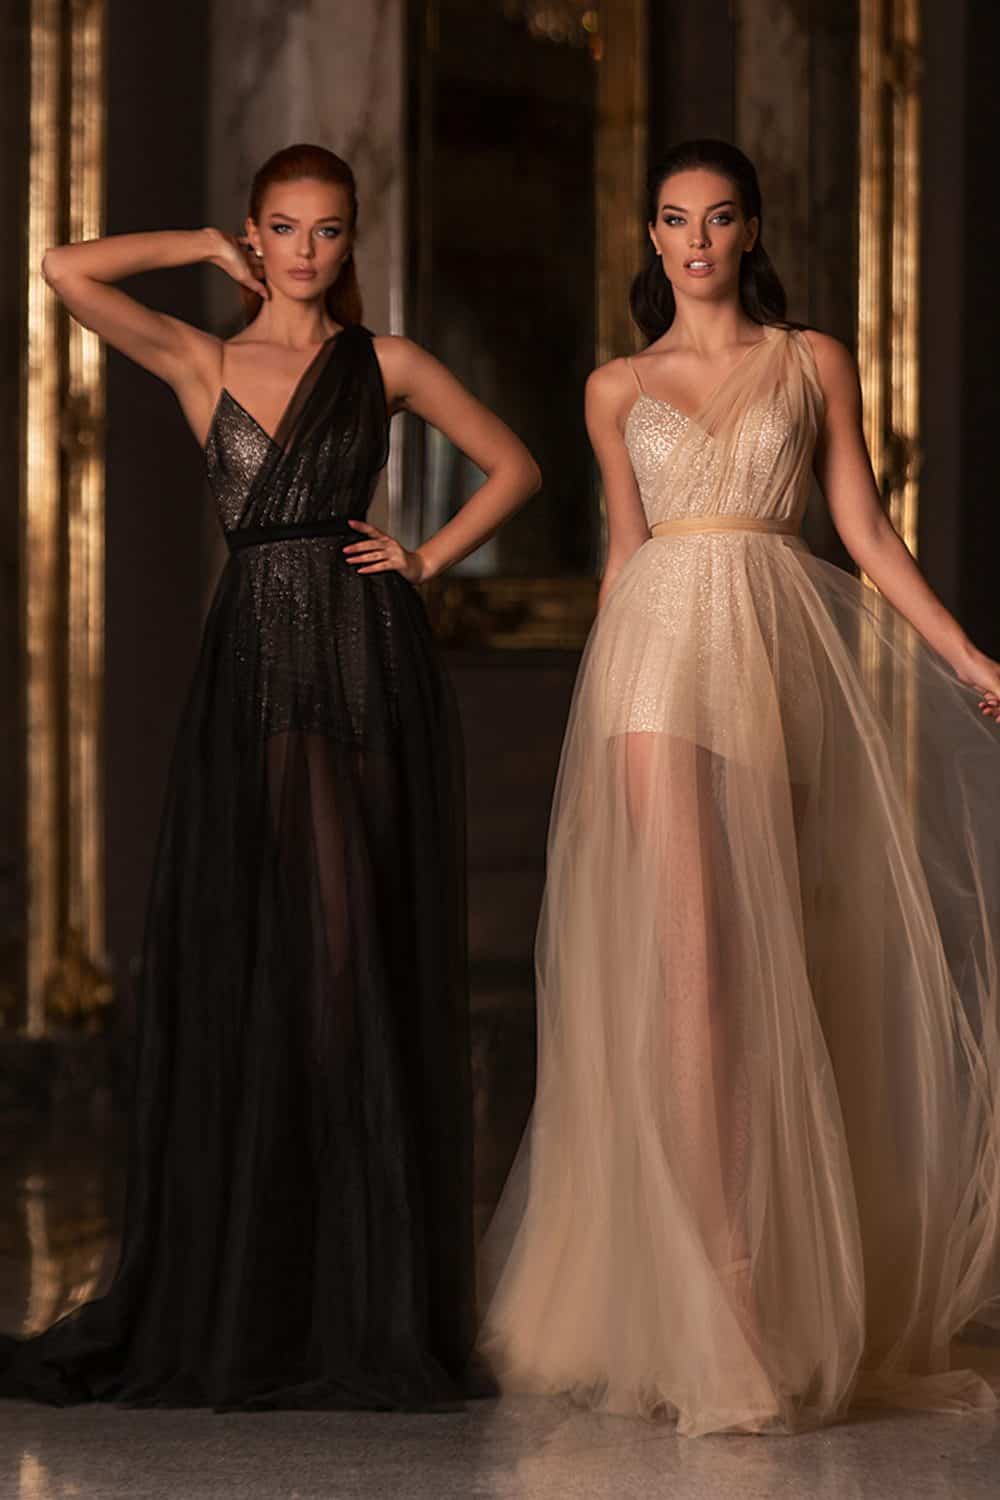 wona concept bridesmaids dresses gold and black